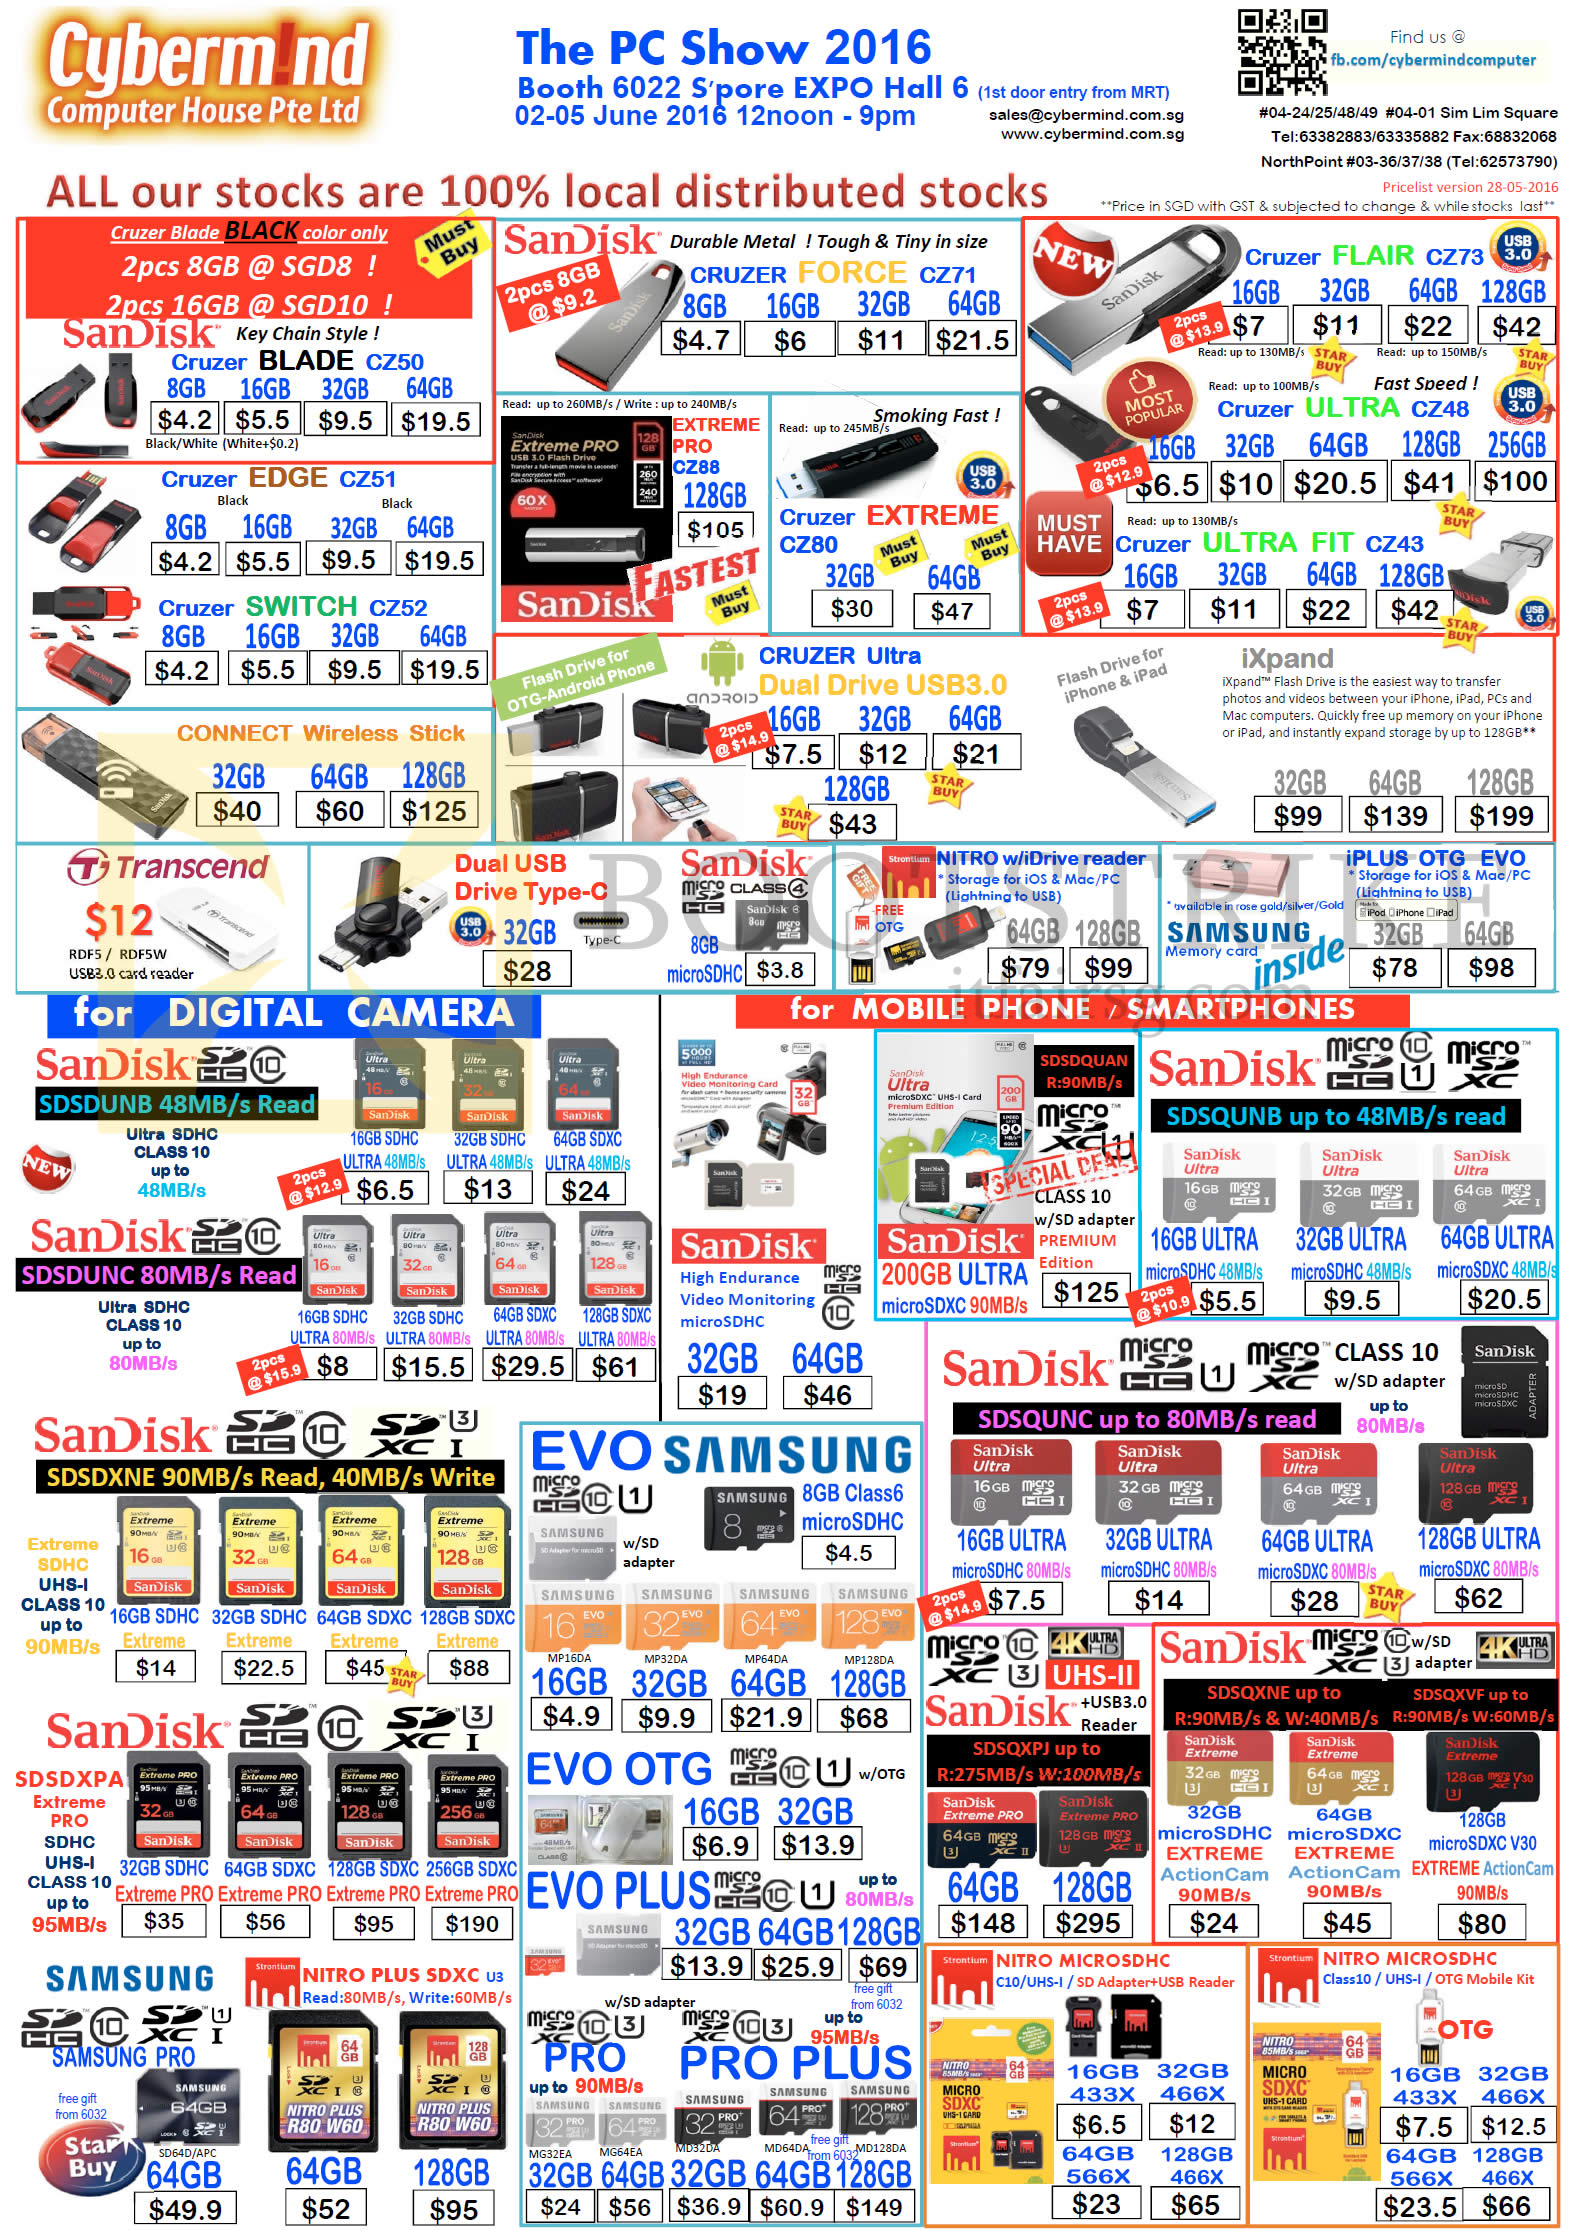 PC SHOW 2016 price list image brochure of Cybermind Thumb Drives, SD Cards, Sandisk, Samsung, Cruzer Blade, Force, Flair, Ultra, Extreme, Edge, Switch, Evo, OTG, Plus, Pro, Plus, Nitro MicroSDHC, OTG